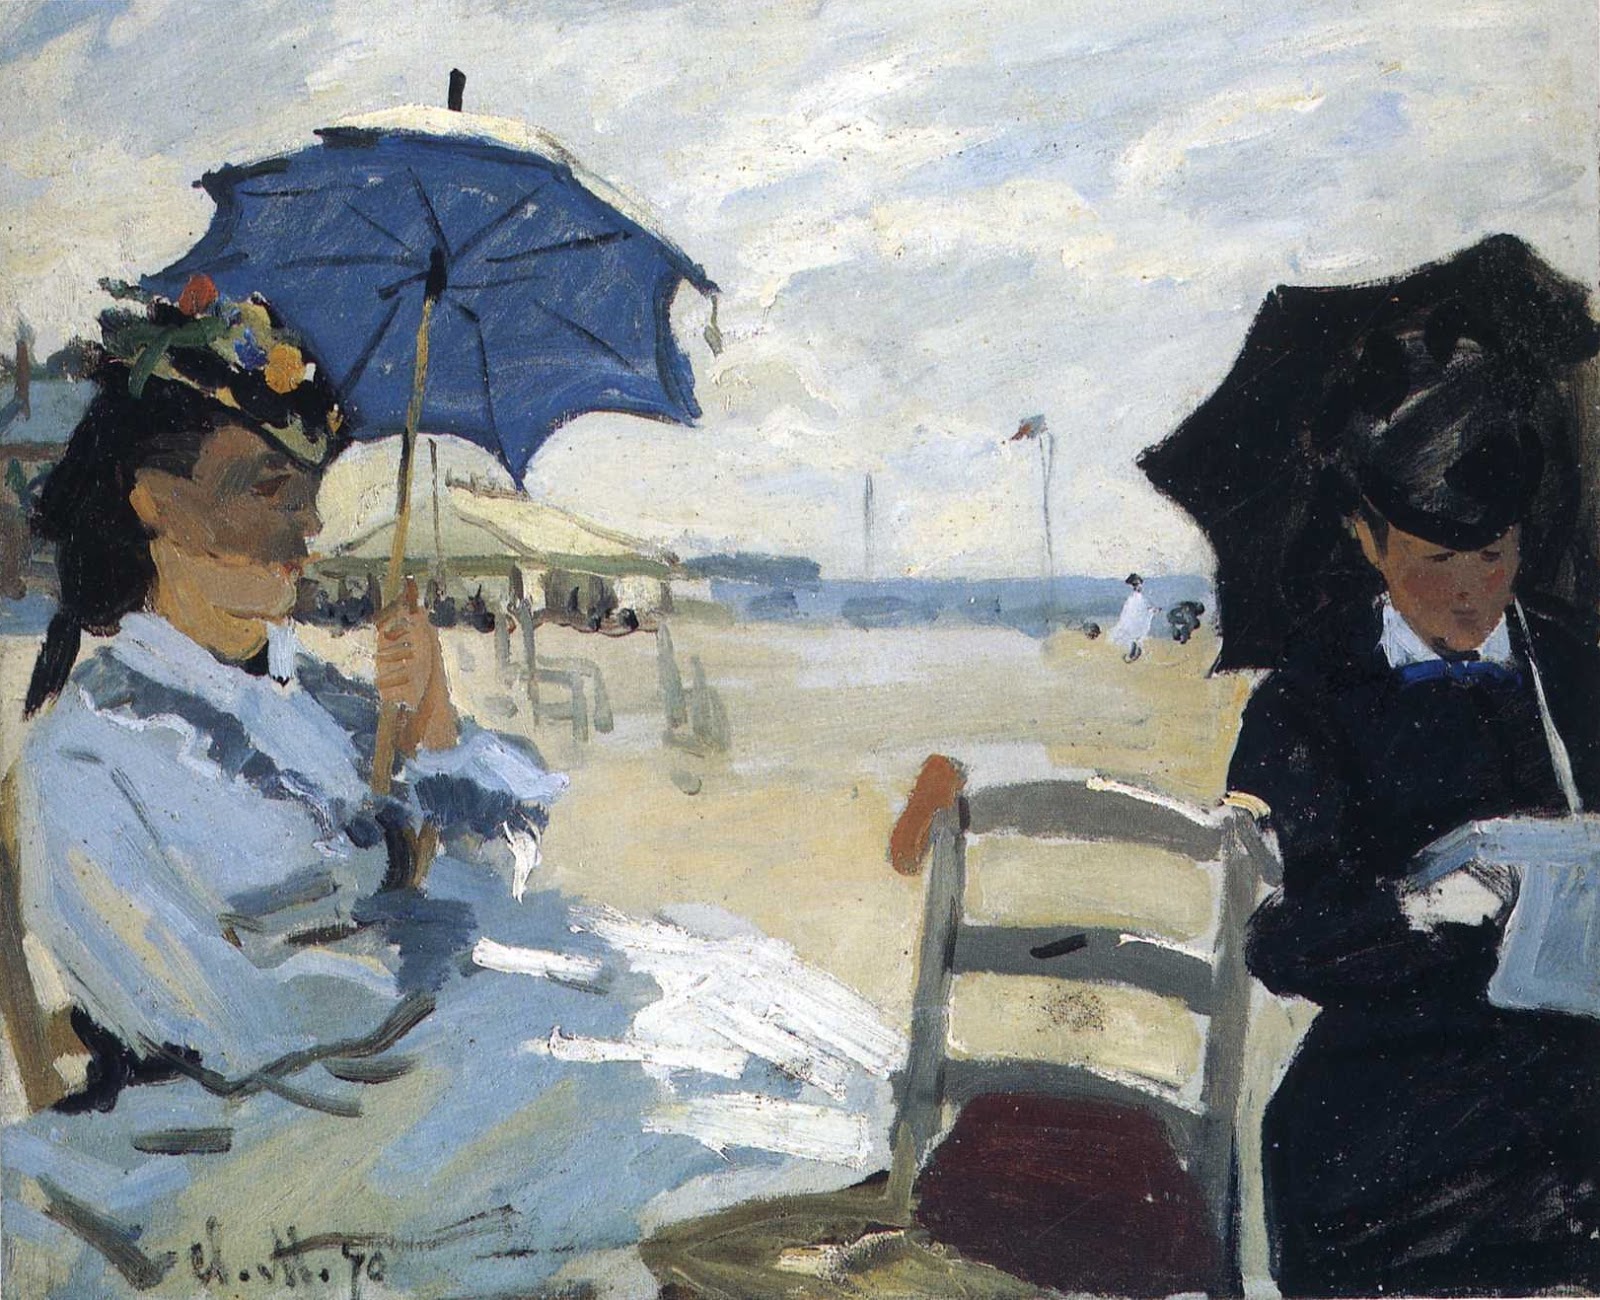 Claude+Monet-1840-1926 (731).jpg